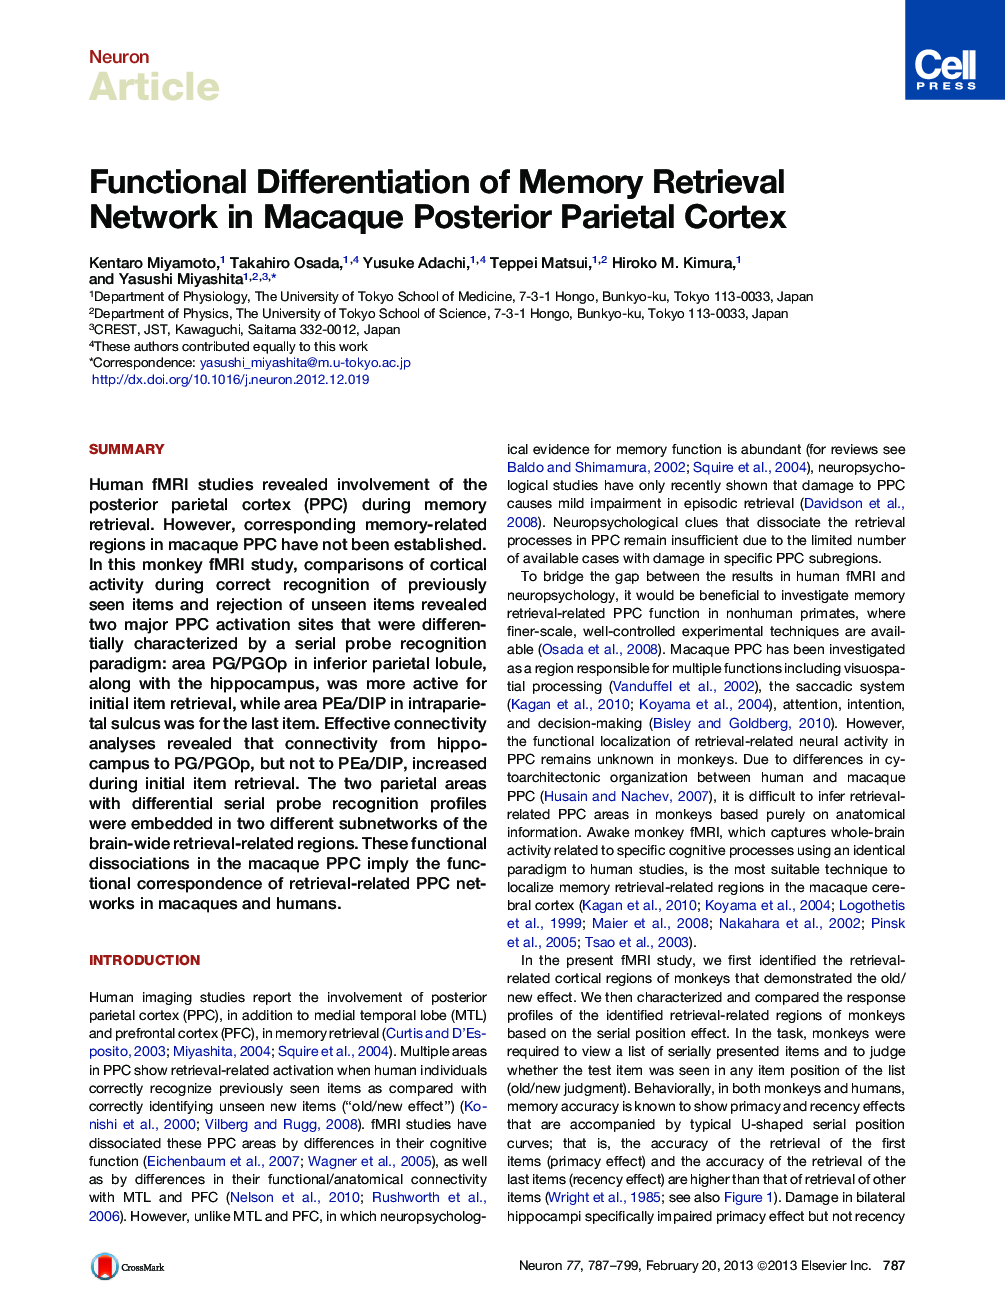 Functional Differentiation of Memory Retrieval Network in Macaque Posterior Parietal Cortex